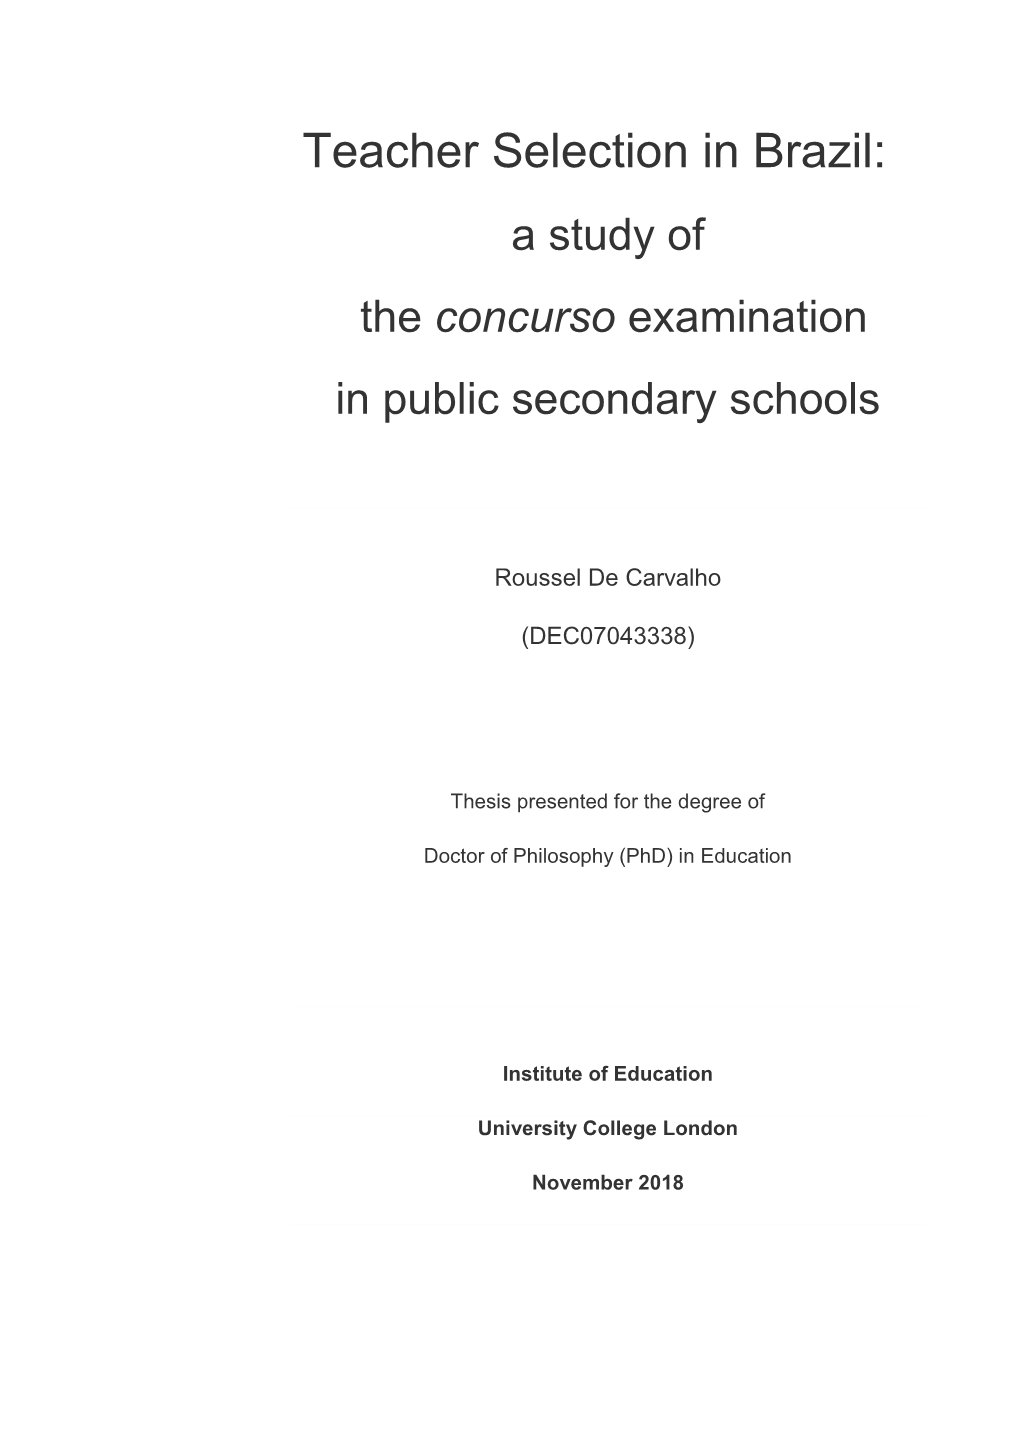 Teacher Selection in Brazil: a Study of the Concurso Examination